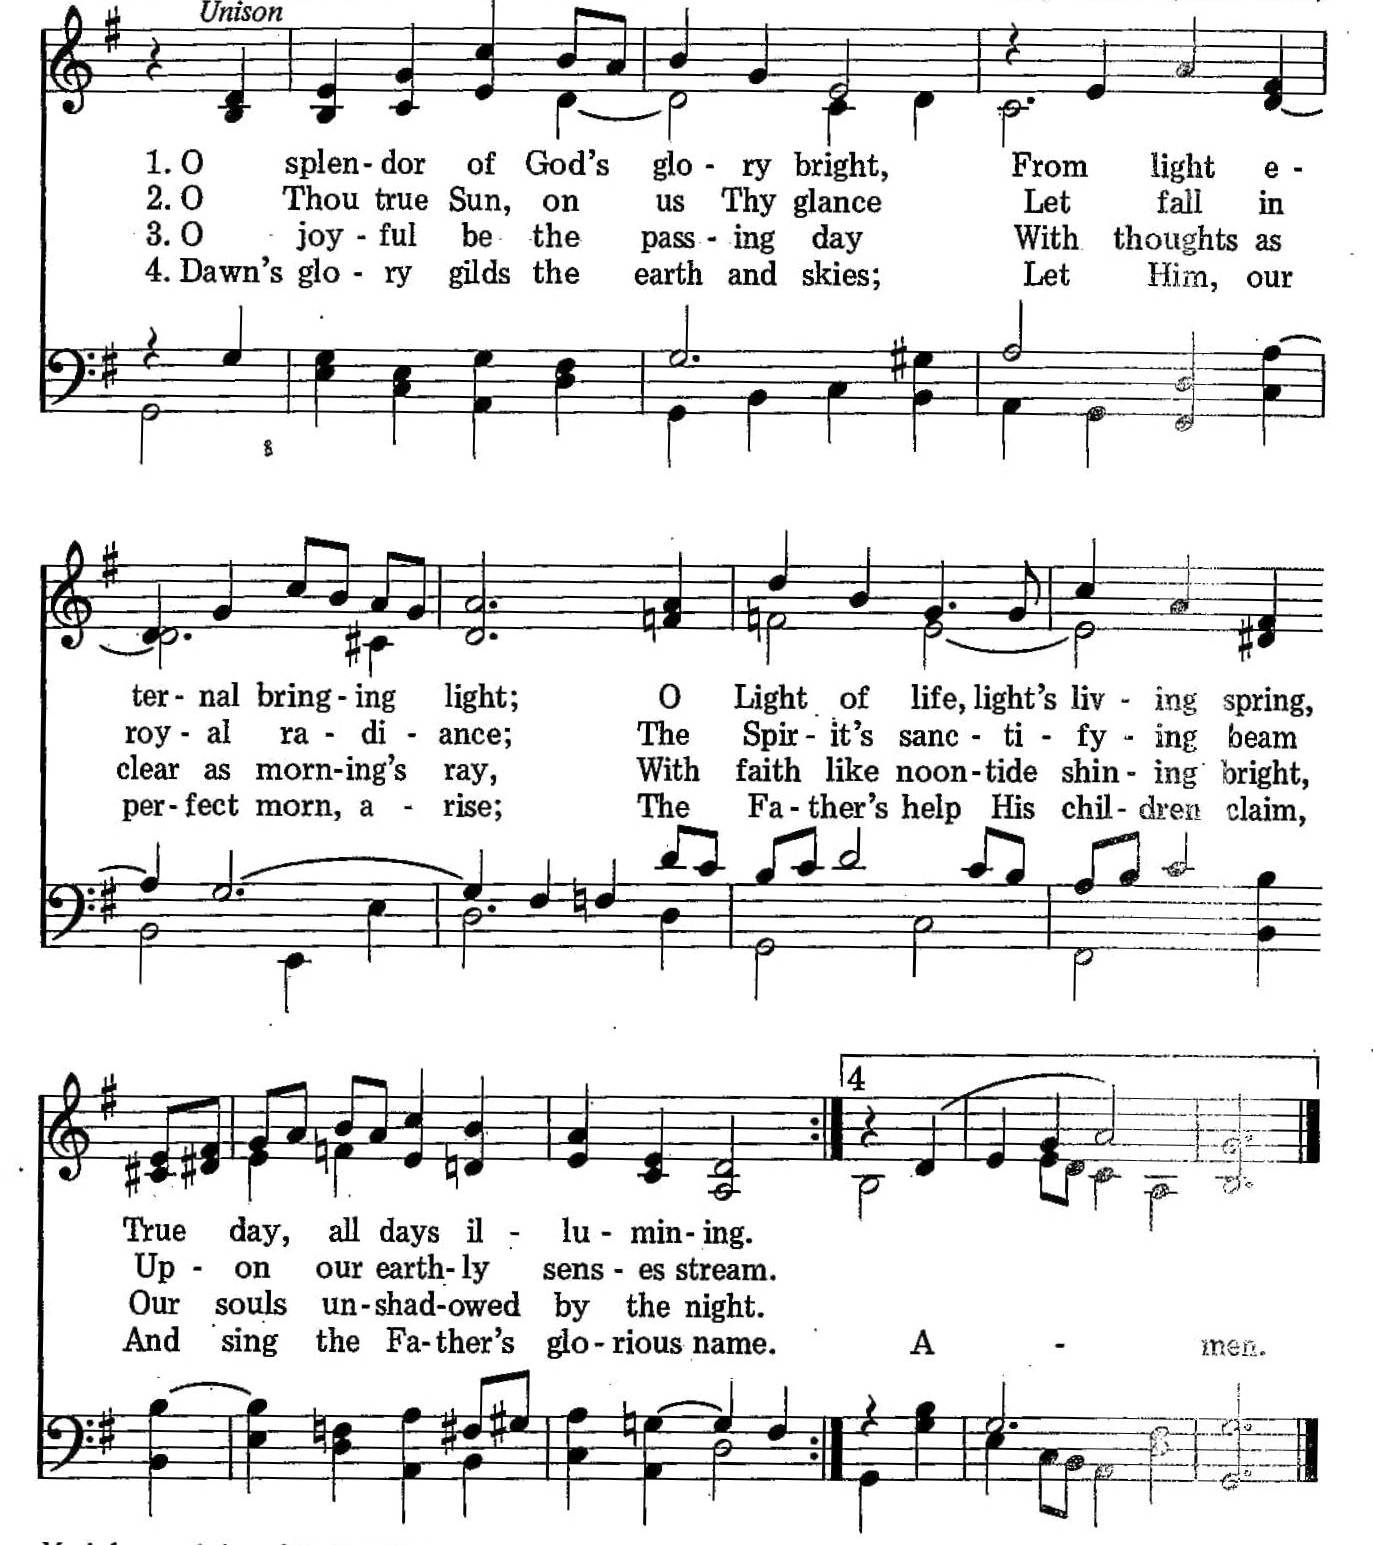 041 – O Splendor of God's Glory Bright sheet music